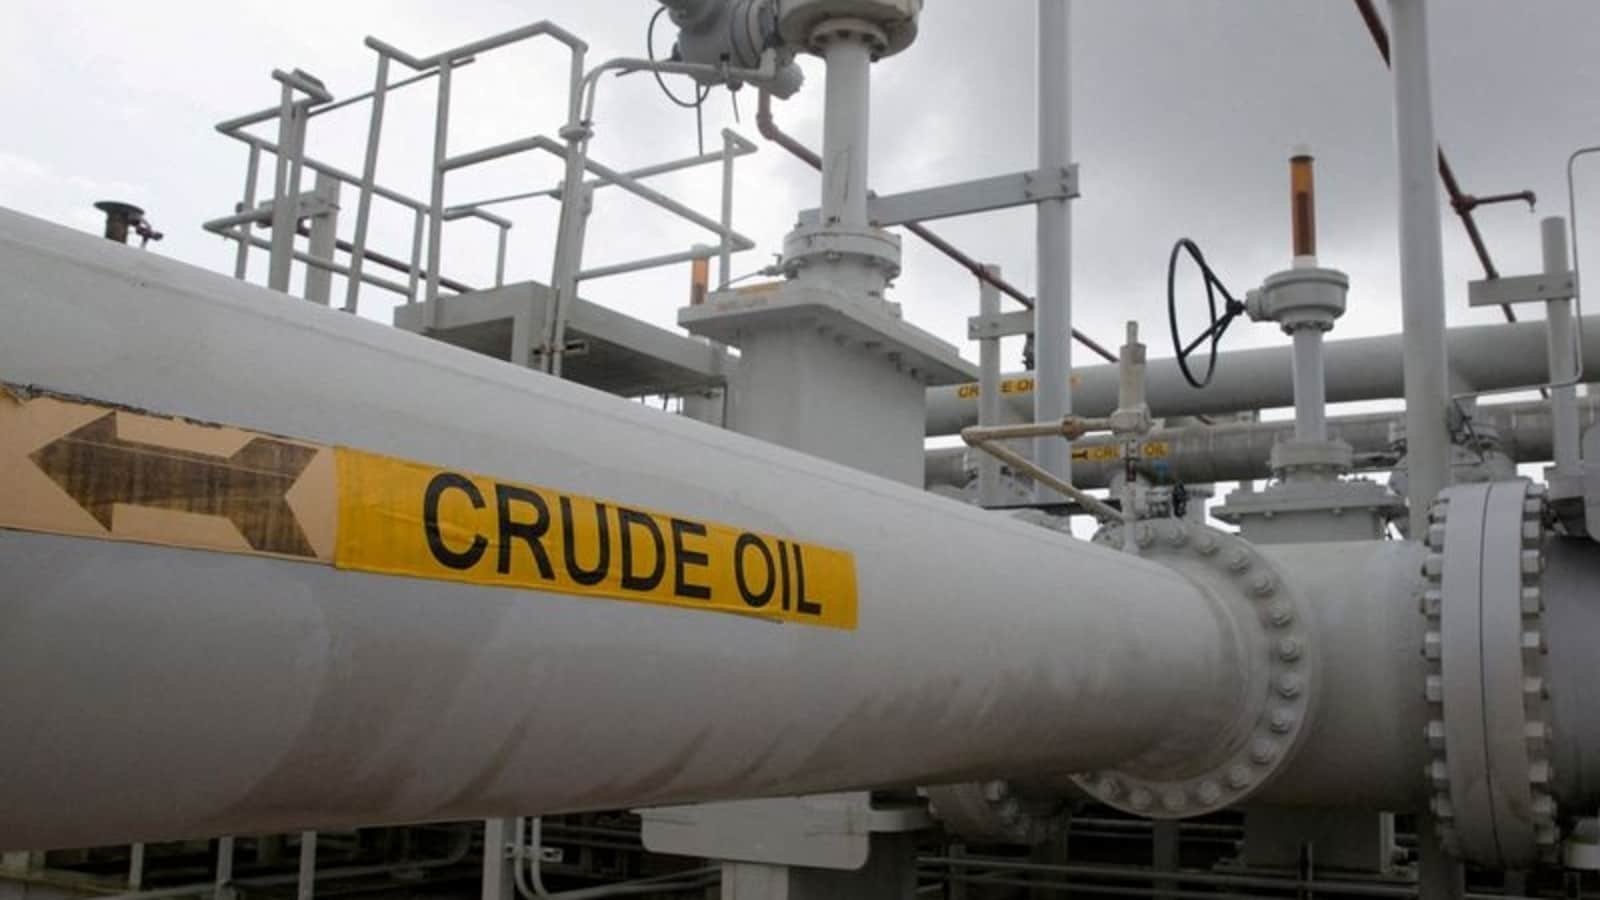 Russian crude oil news tamil